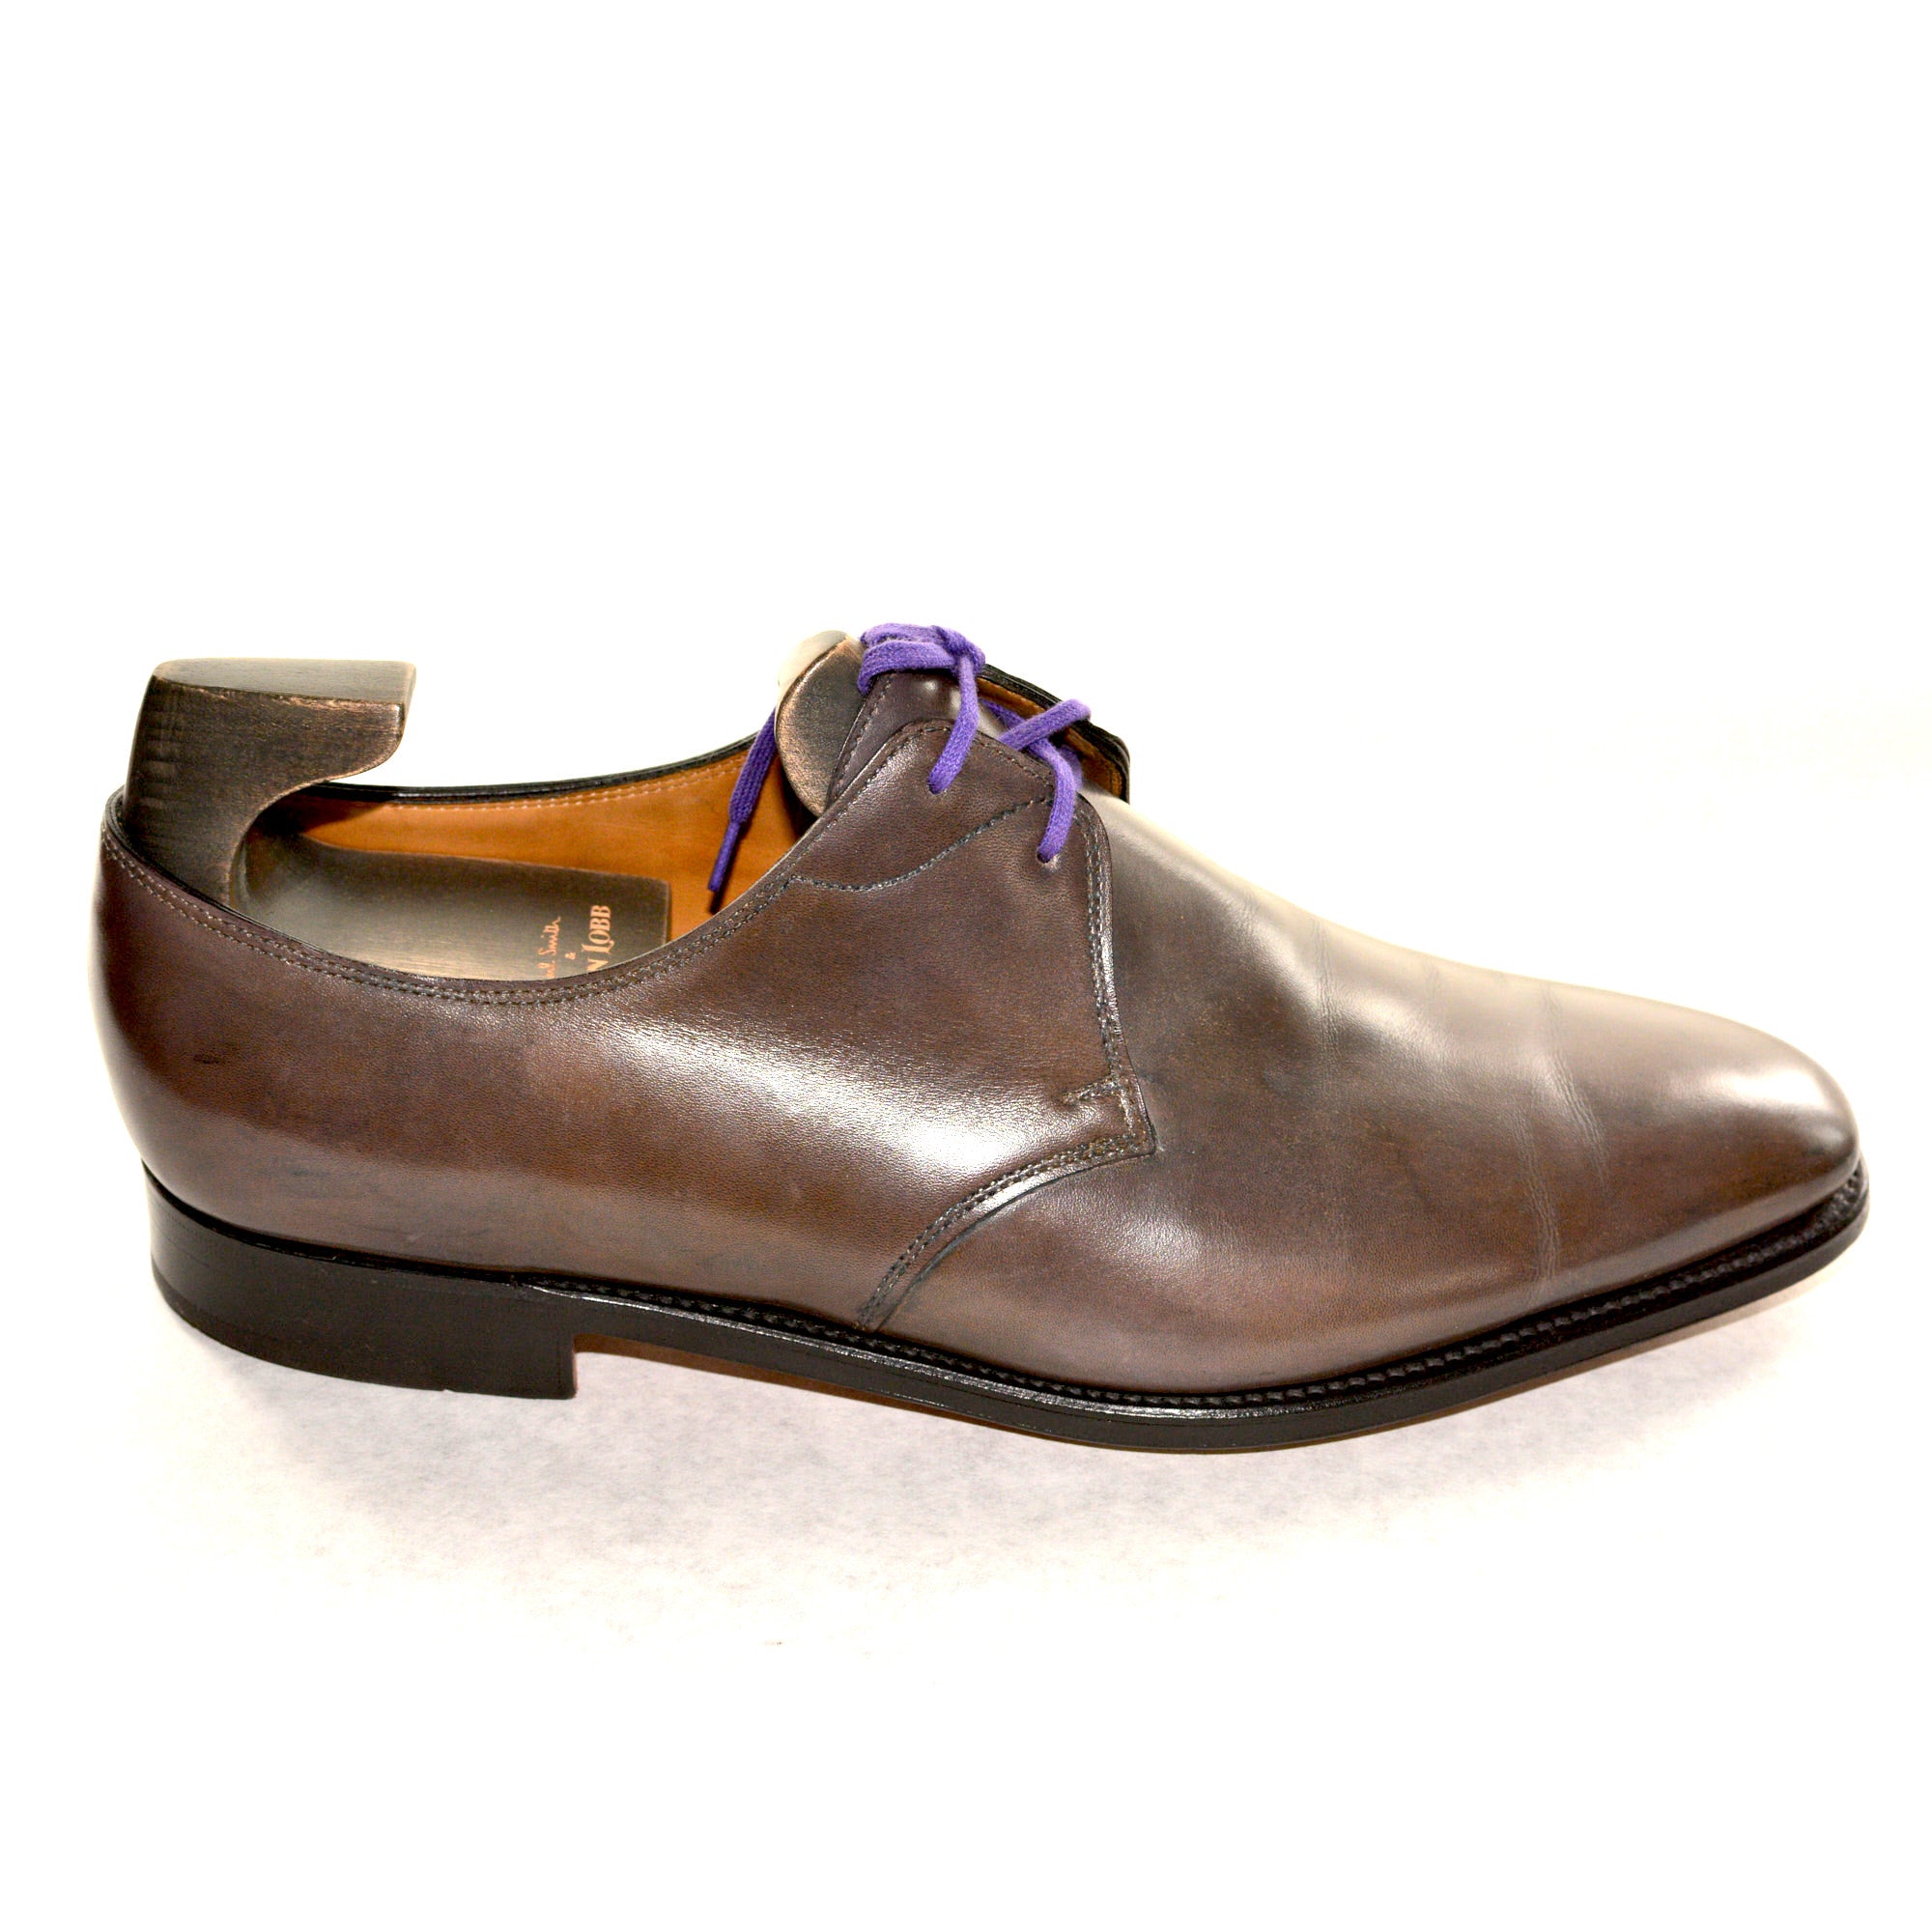 JOHN LOBB x PAUL SMITH "Willoughby" Museum Calf Derby Shoes 8.5E US 9.5 8000 JOHN LOBB